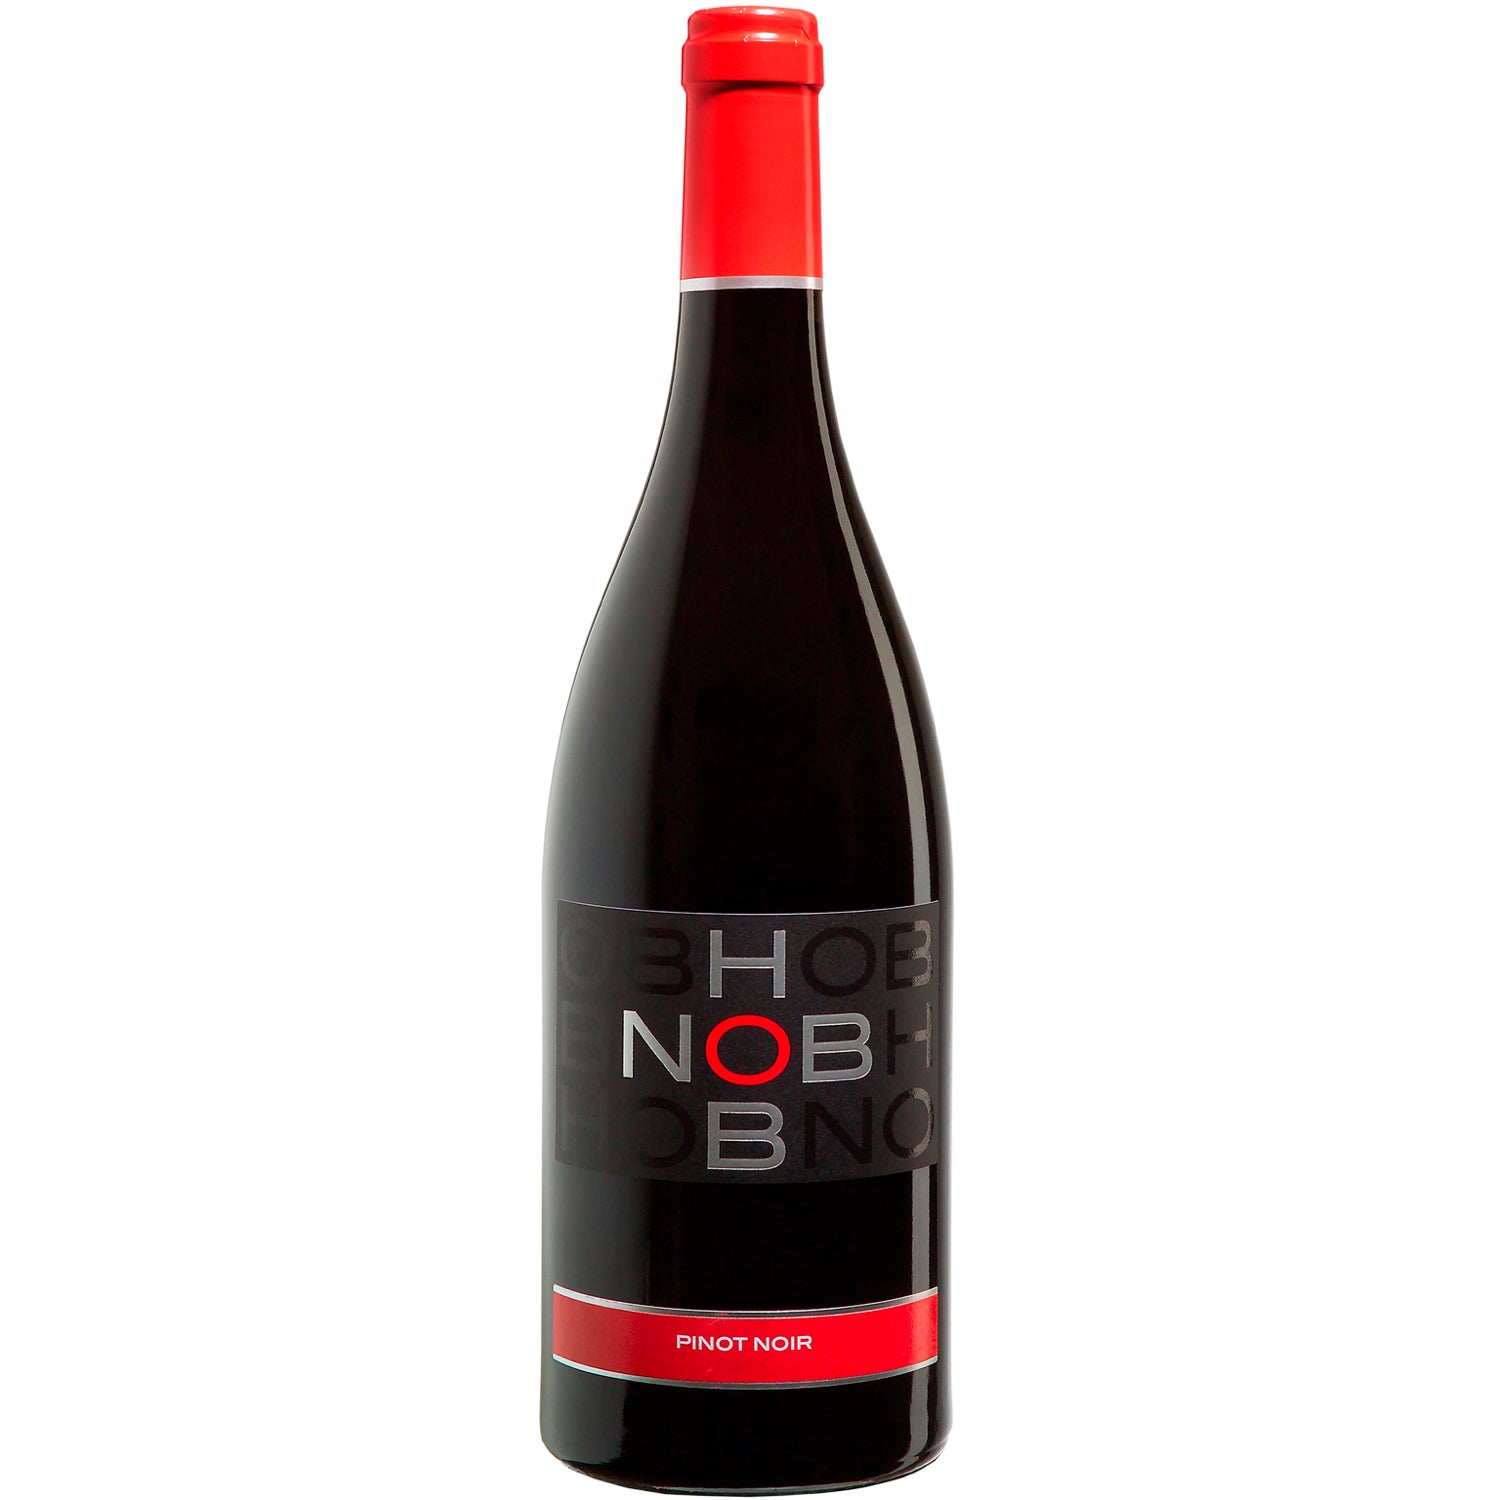 Hob Nob Pinot Noir [750ml]